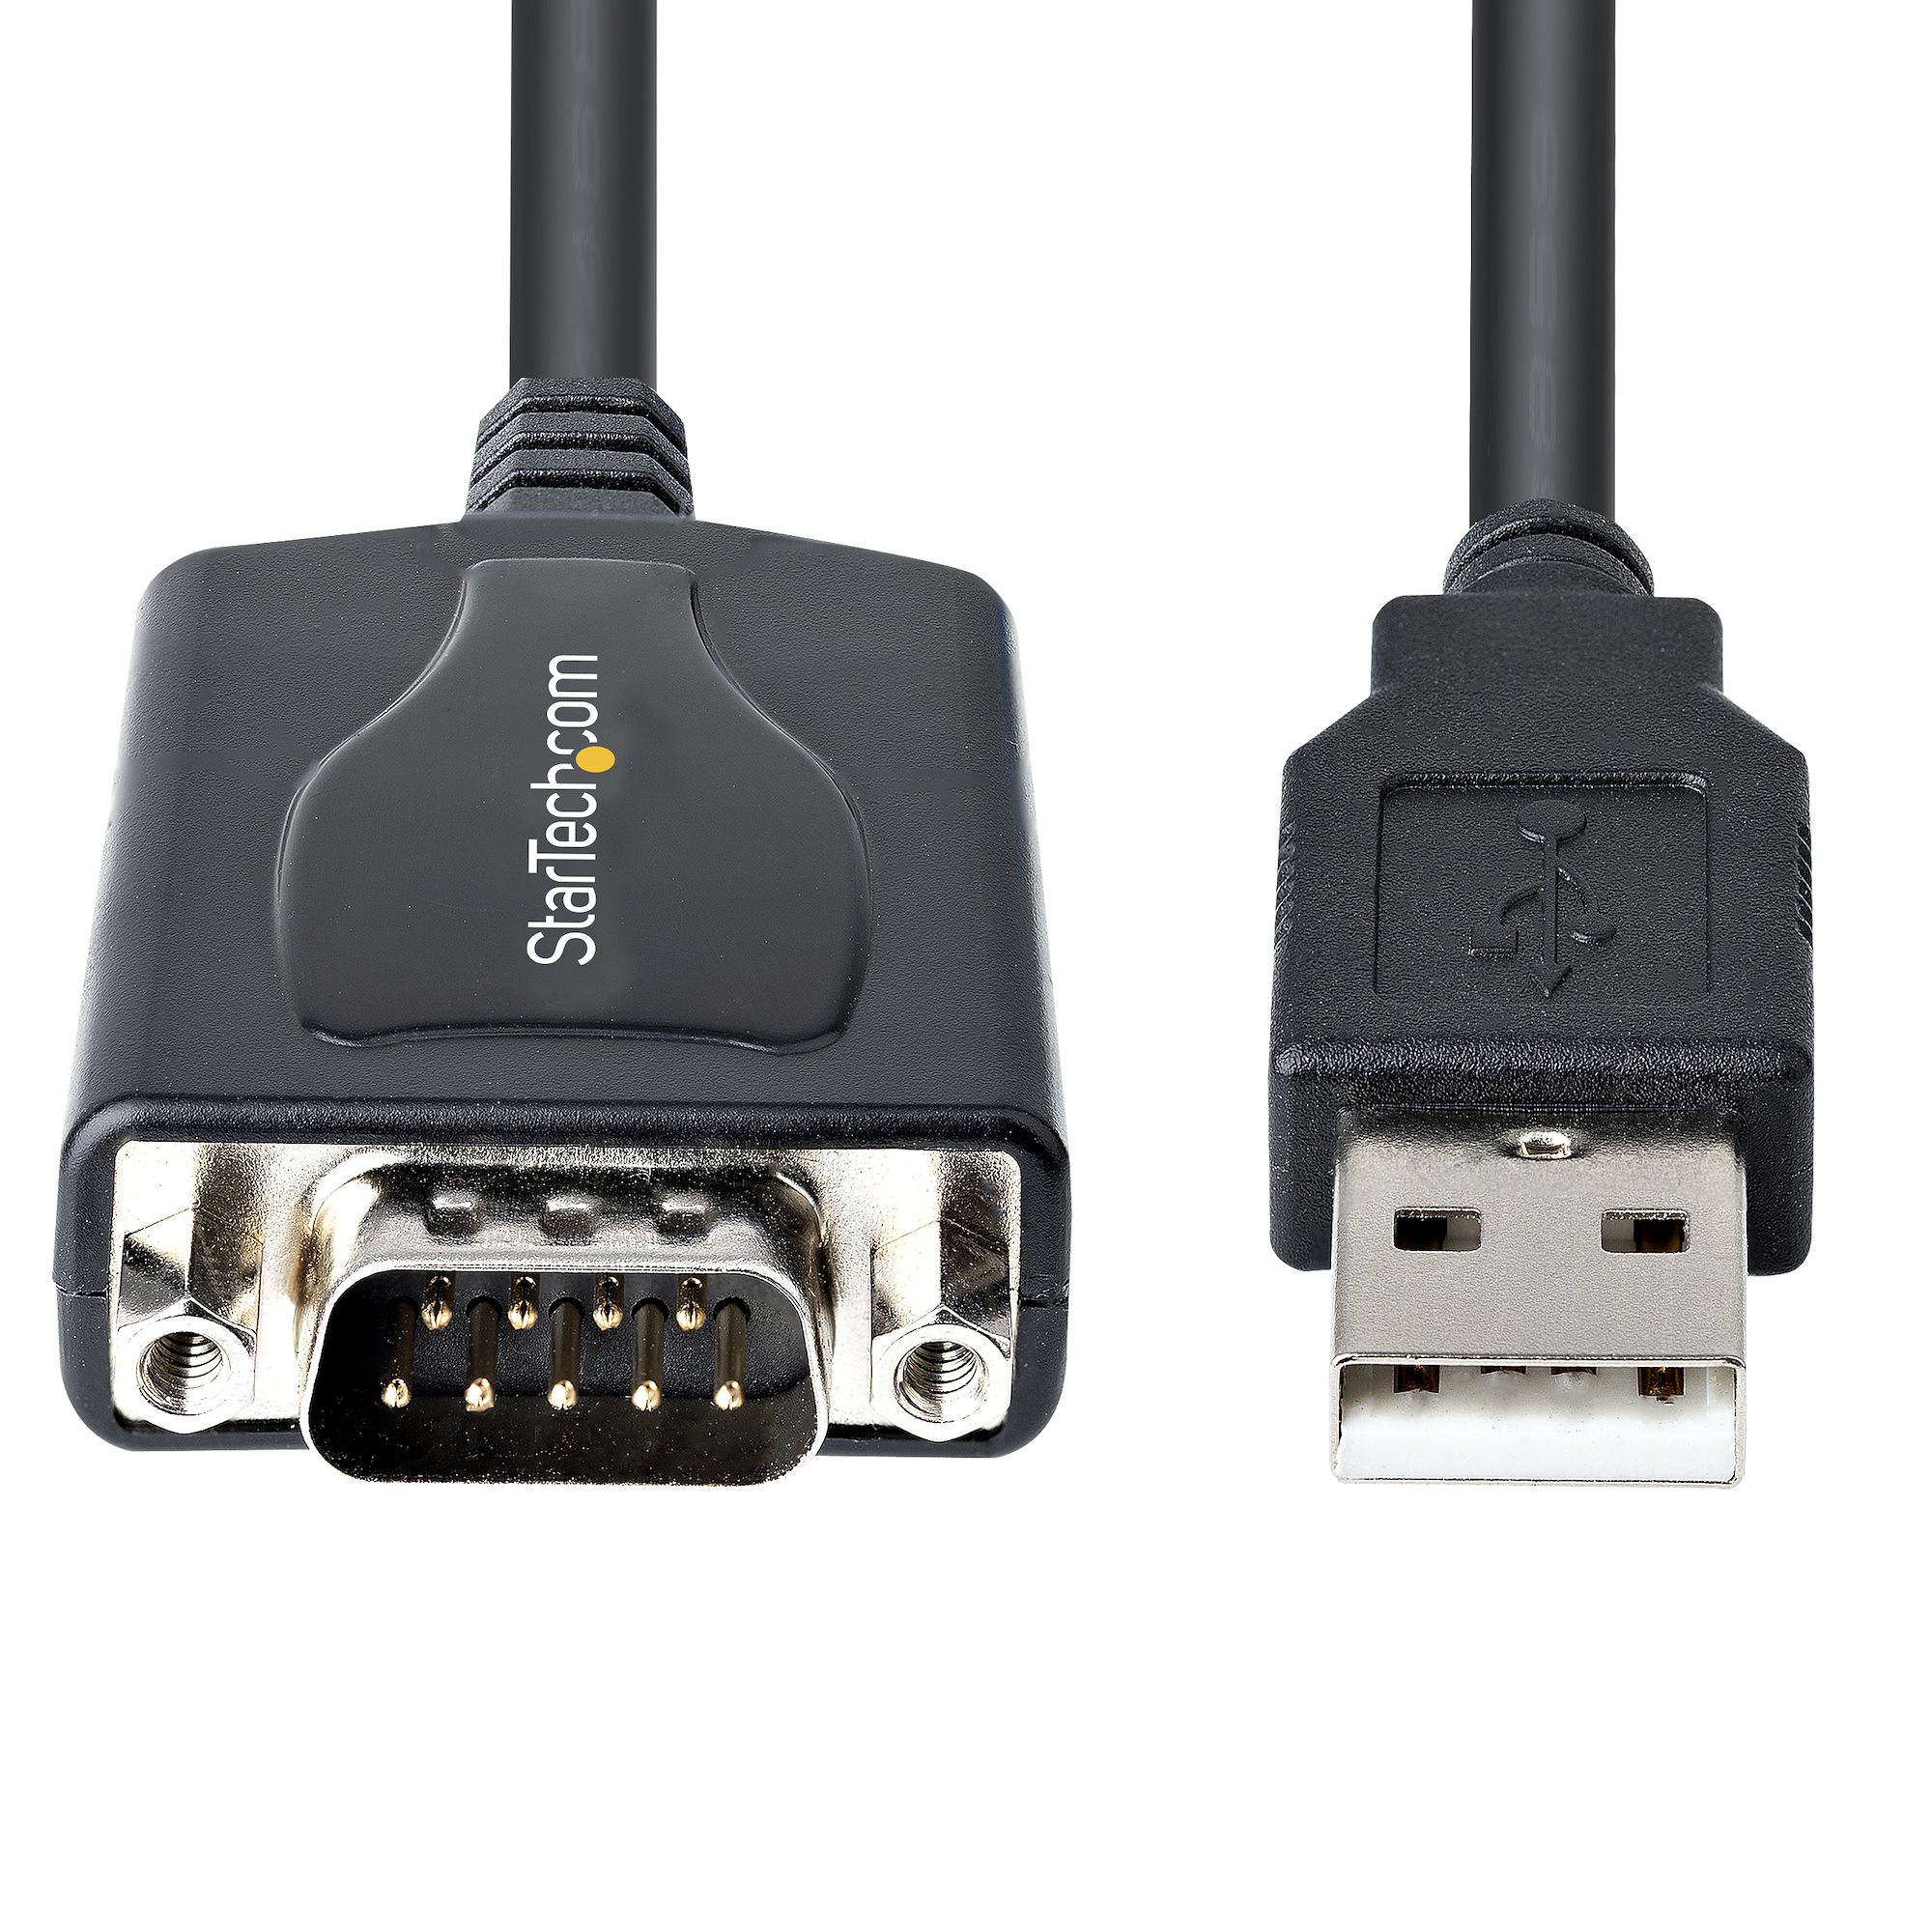 StarTech.com Câble USB vers RS232 de 1m - Câble Convertisseur USB v